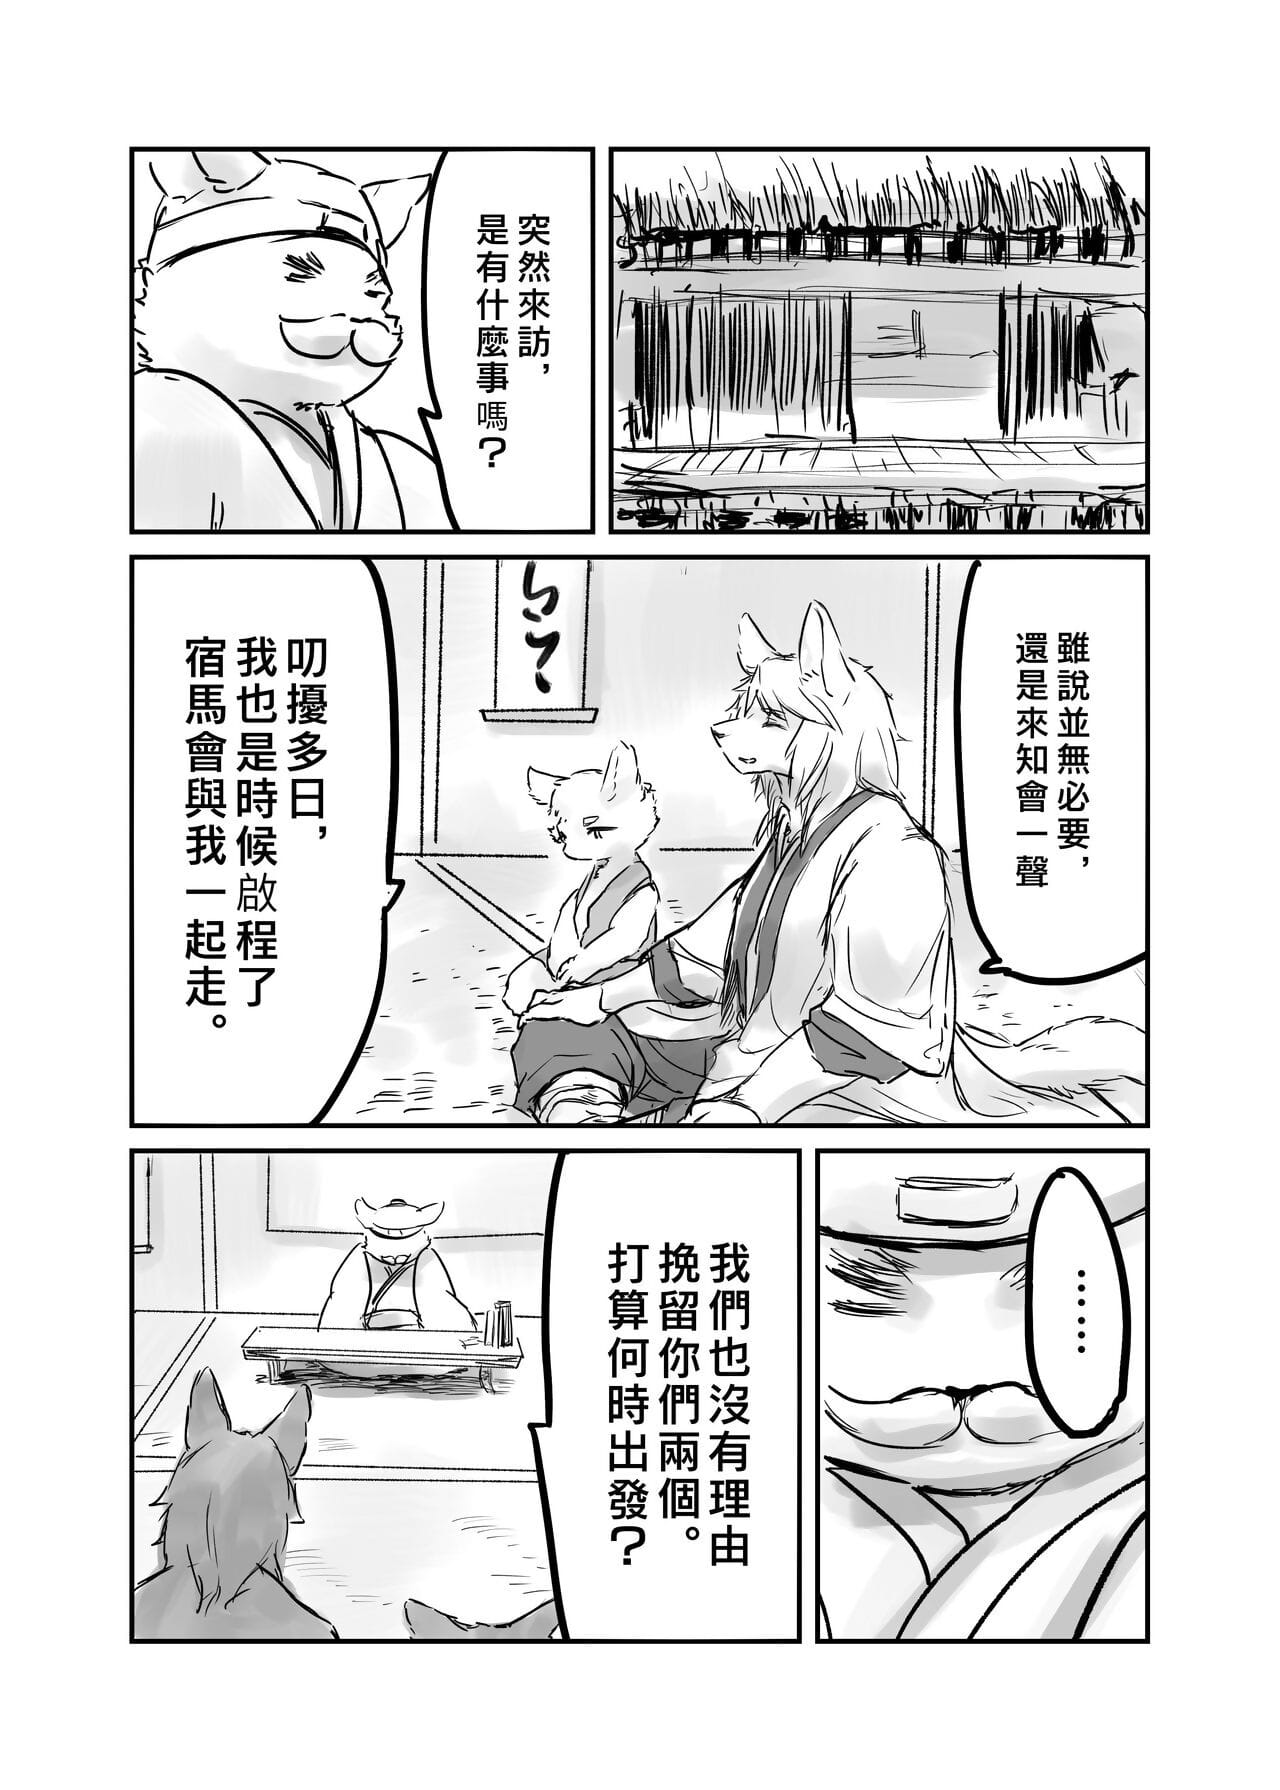 （the आगंतुक 他乡之人 by：鬼流 हिस्सा 2 page 1